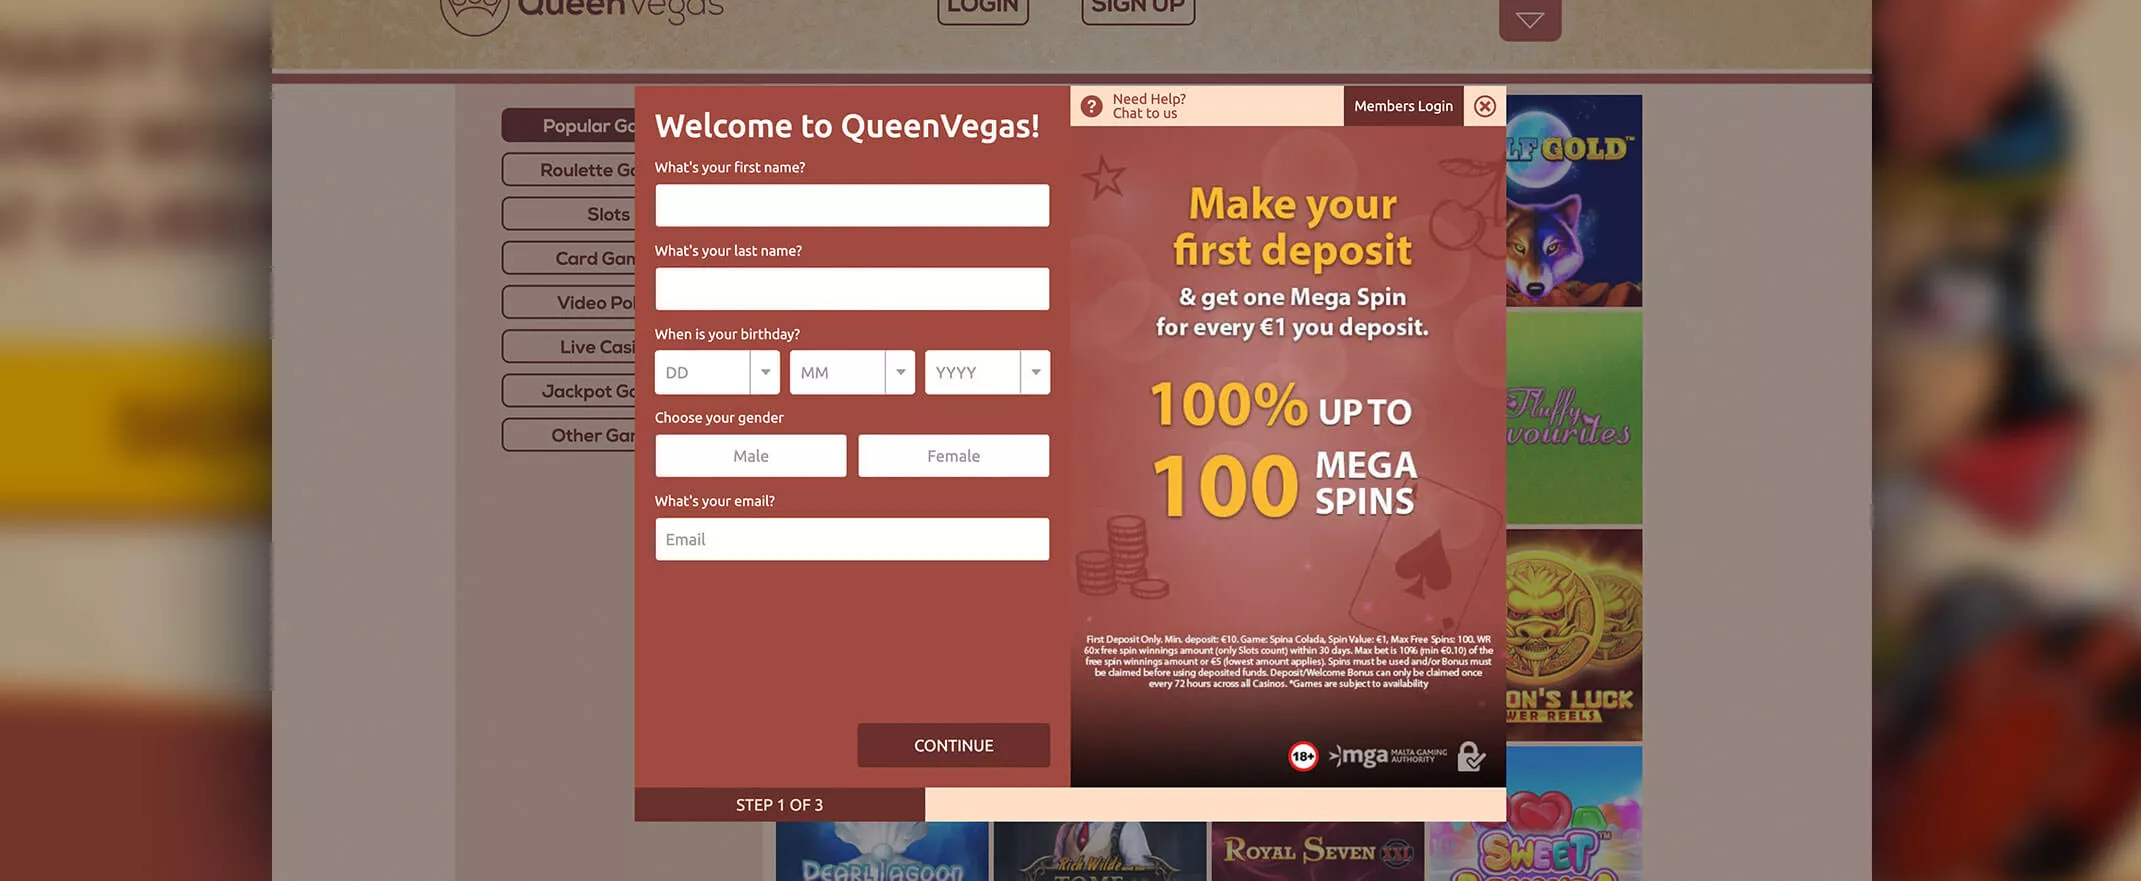 Queen Vegas Casino screenshot of the registration